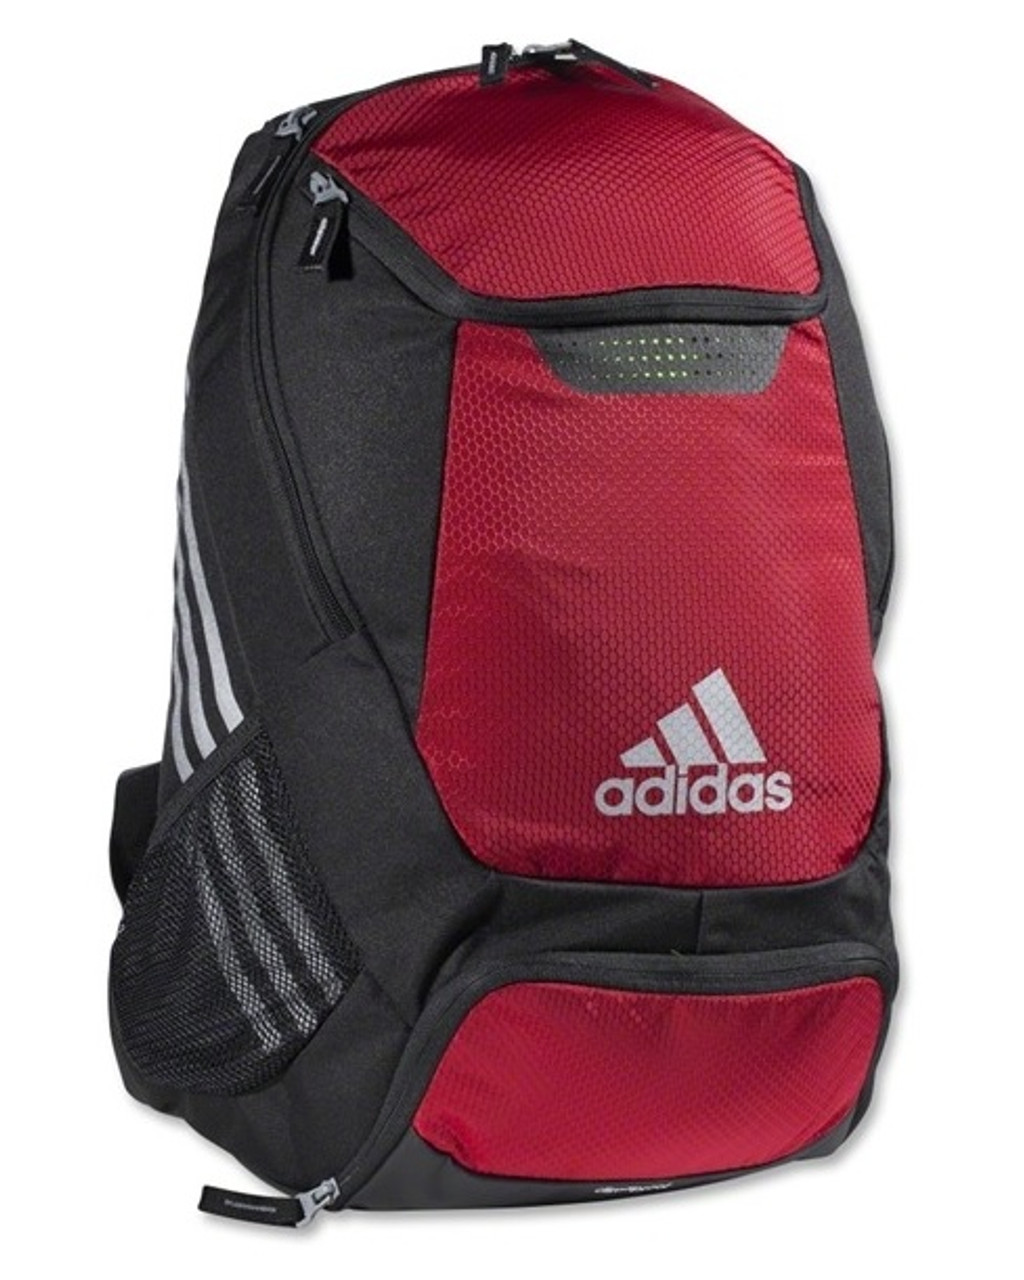 red adidas soccer bag